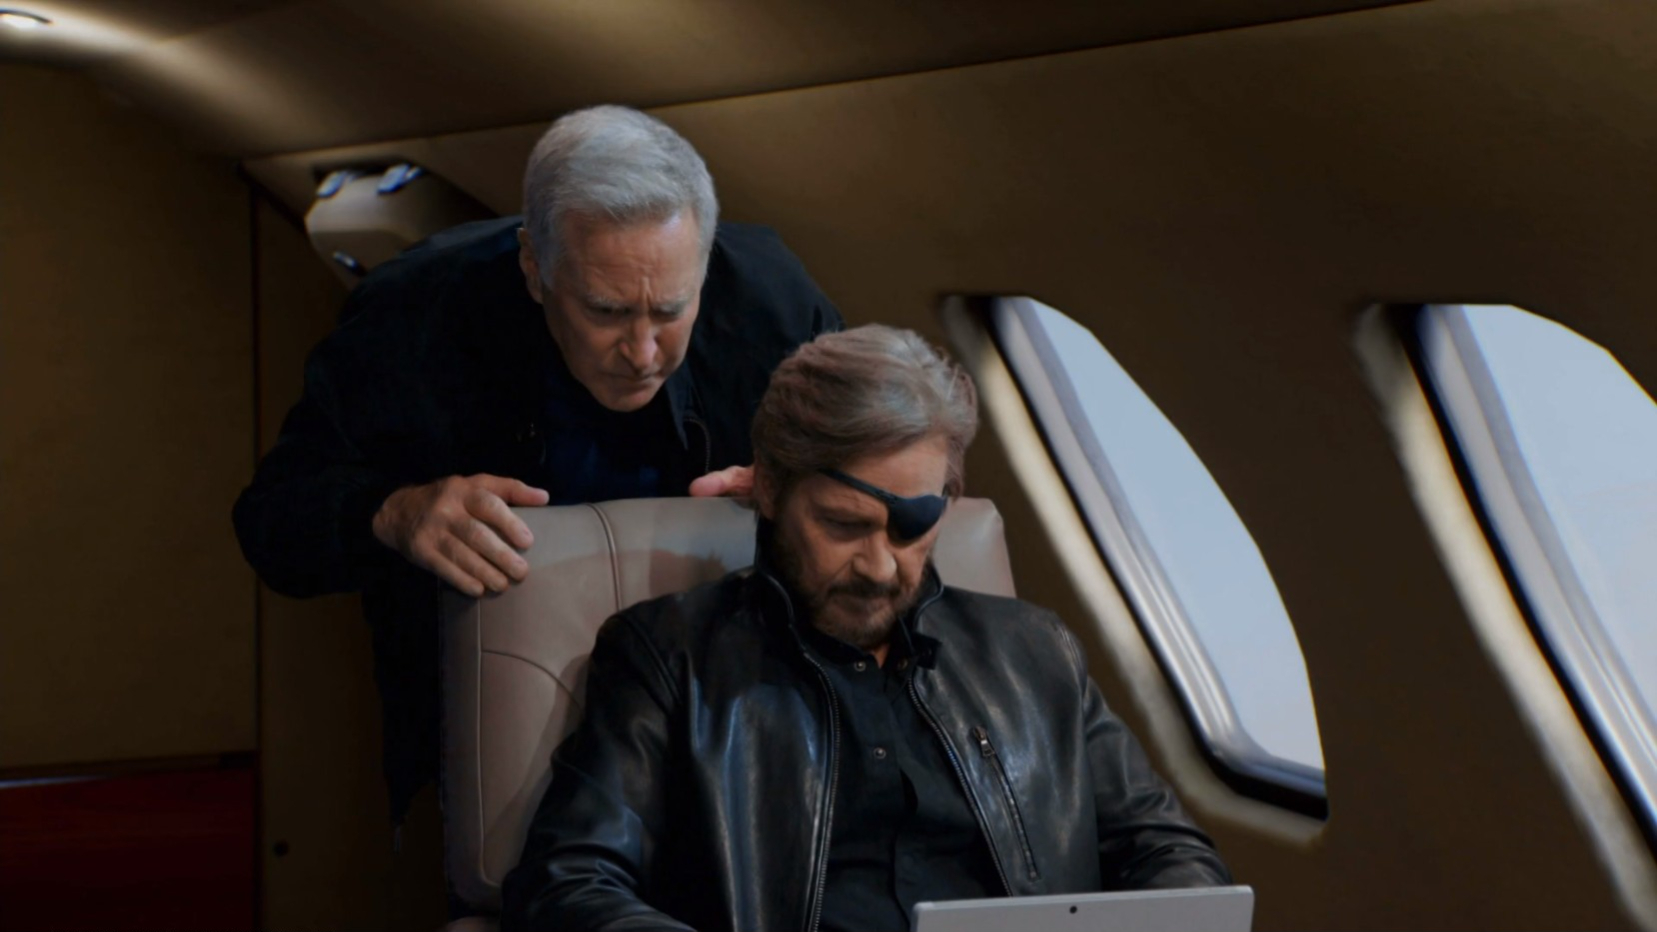 john and steve on a plane